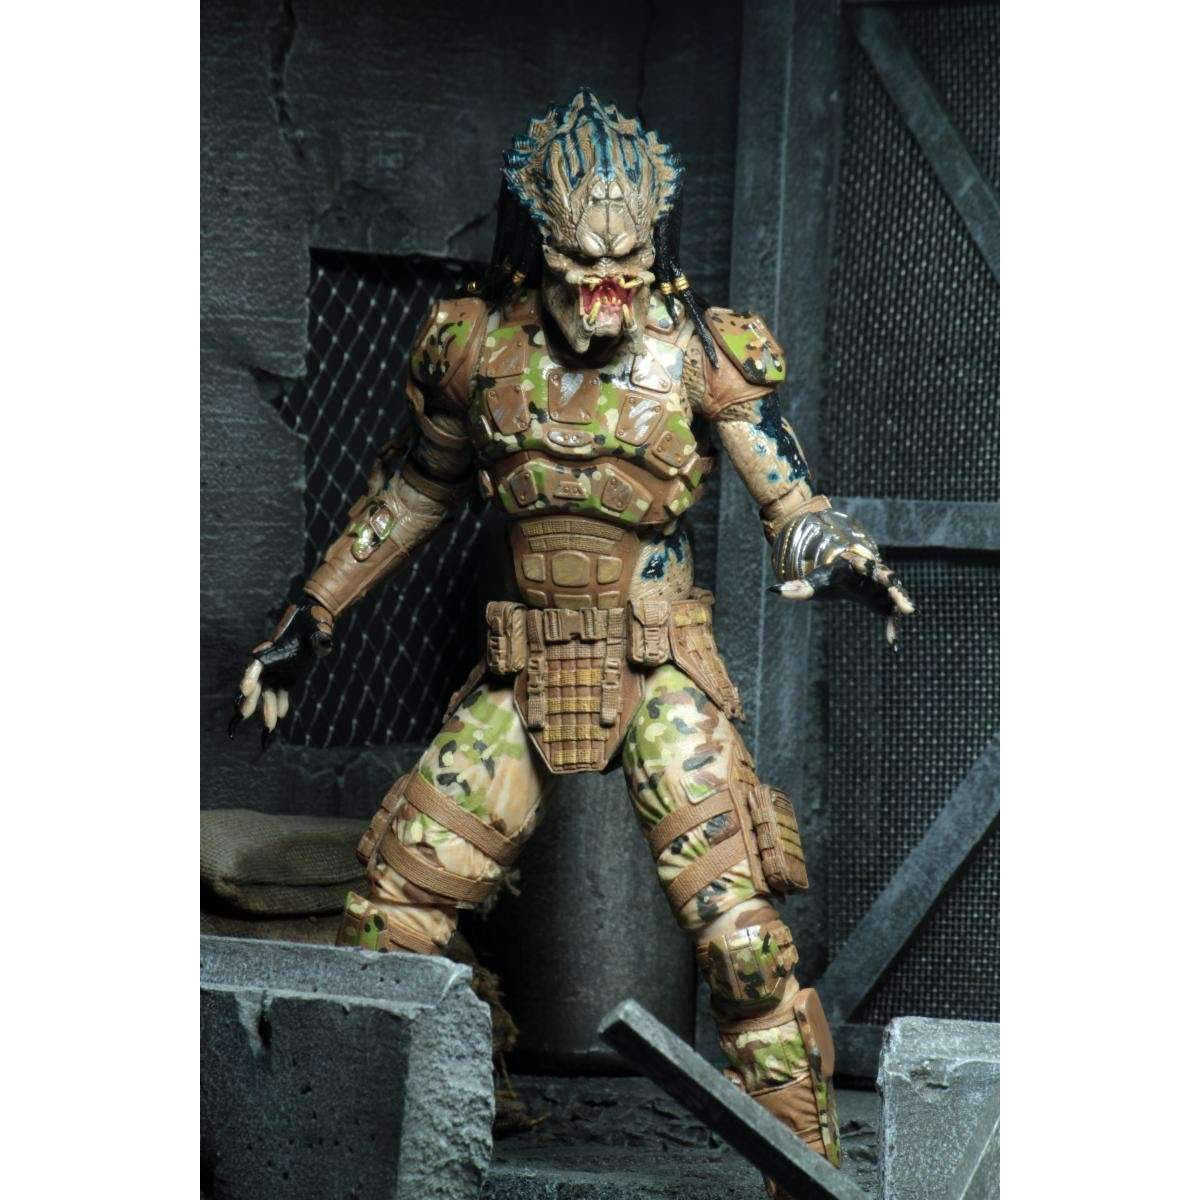 Image of Predator (2018) - 7" Scale Action Figure - Emissary 2 Concept Figure - Q3 2019